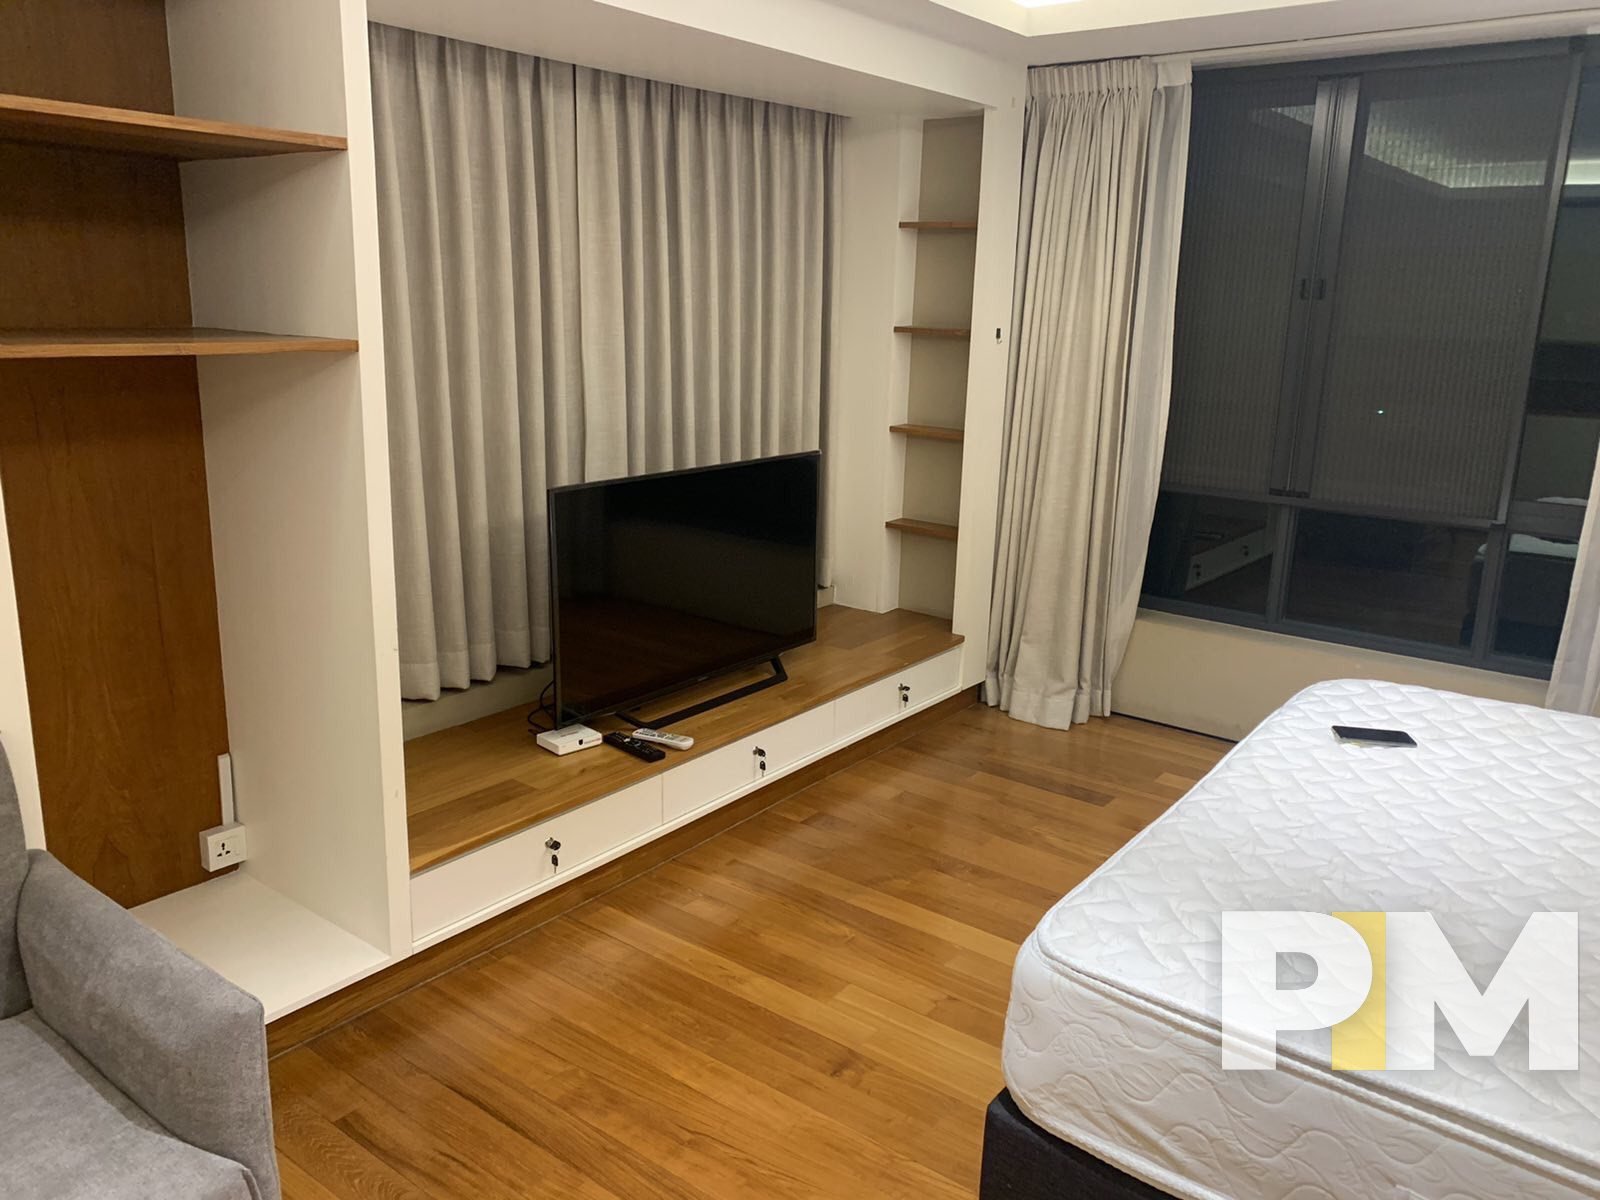 bedroom with TV - Condo for rent in Golden Valley